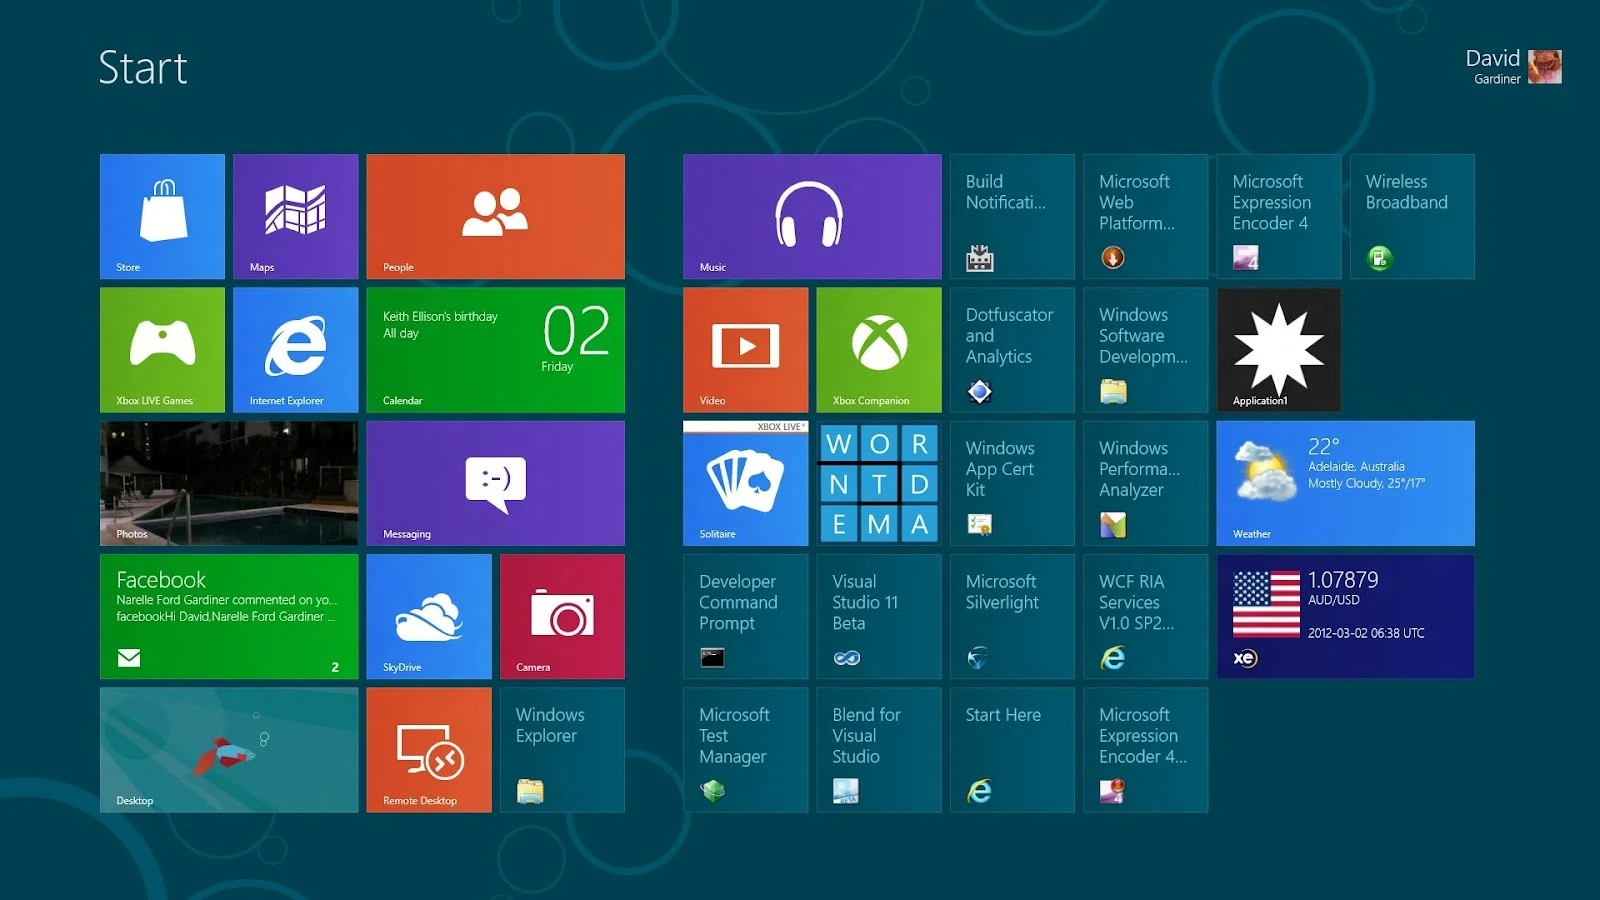 Windows 8 pro iso download